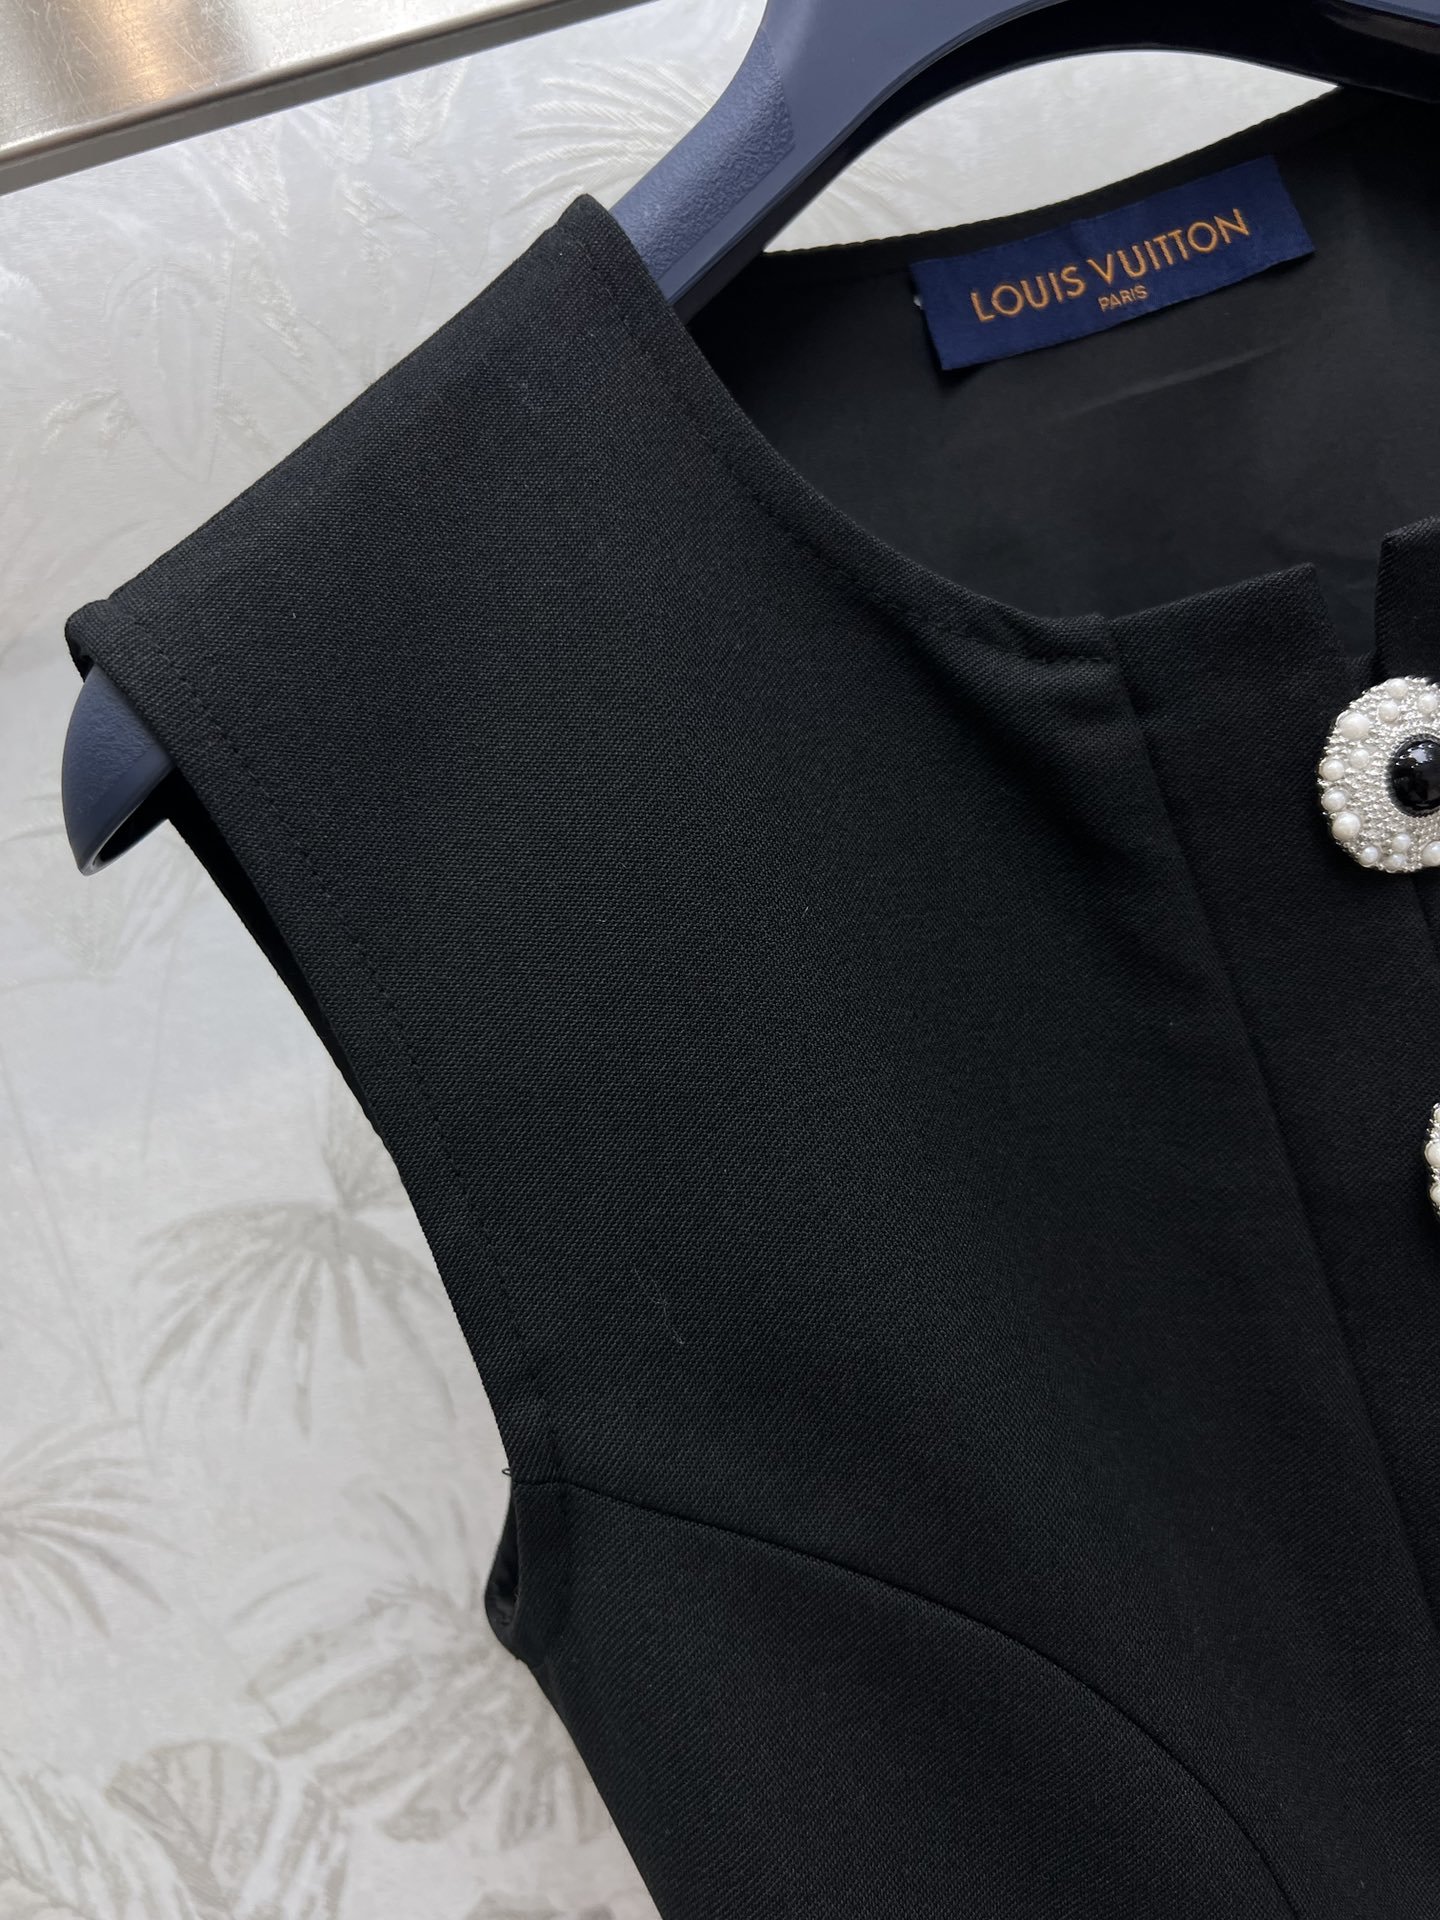 L家24春夏新品时髦优雅的小黑裙宝石镶嵌纽扣装饰连衣裙面料含有羊毛面料挻括有型有质感开模定制的五金配件耗